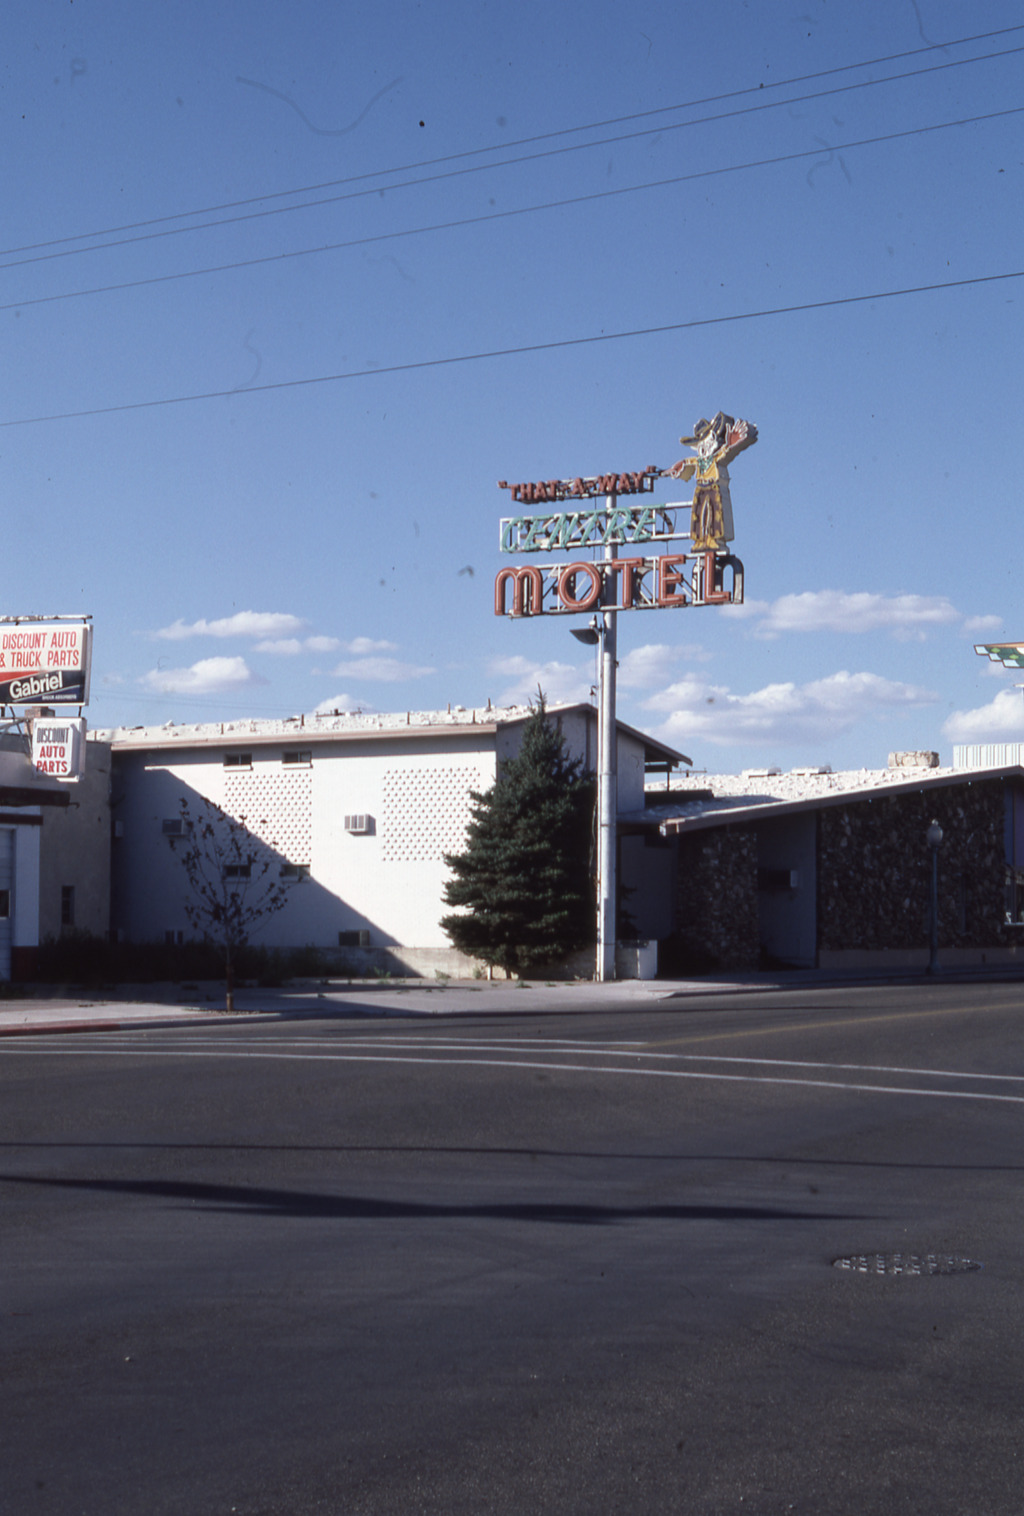 Centre Motel pylon sign, Elko, Nevada: photographic print